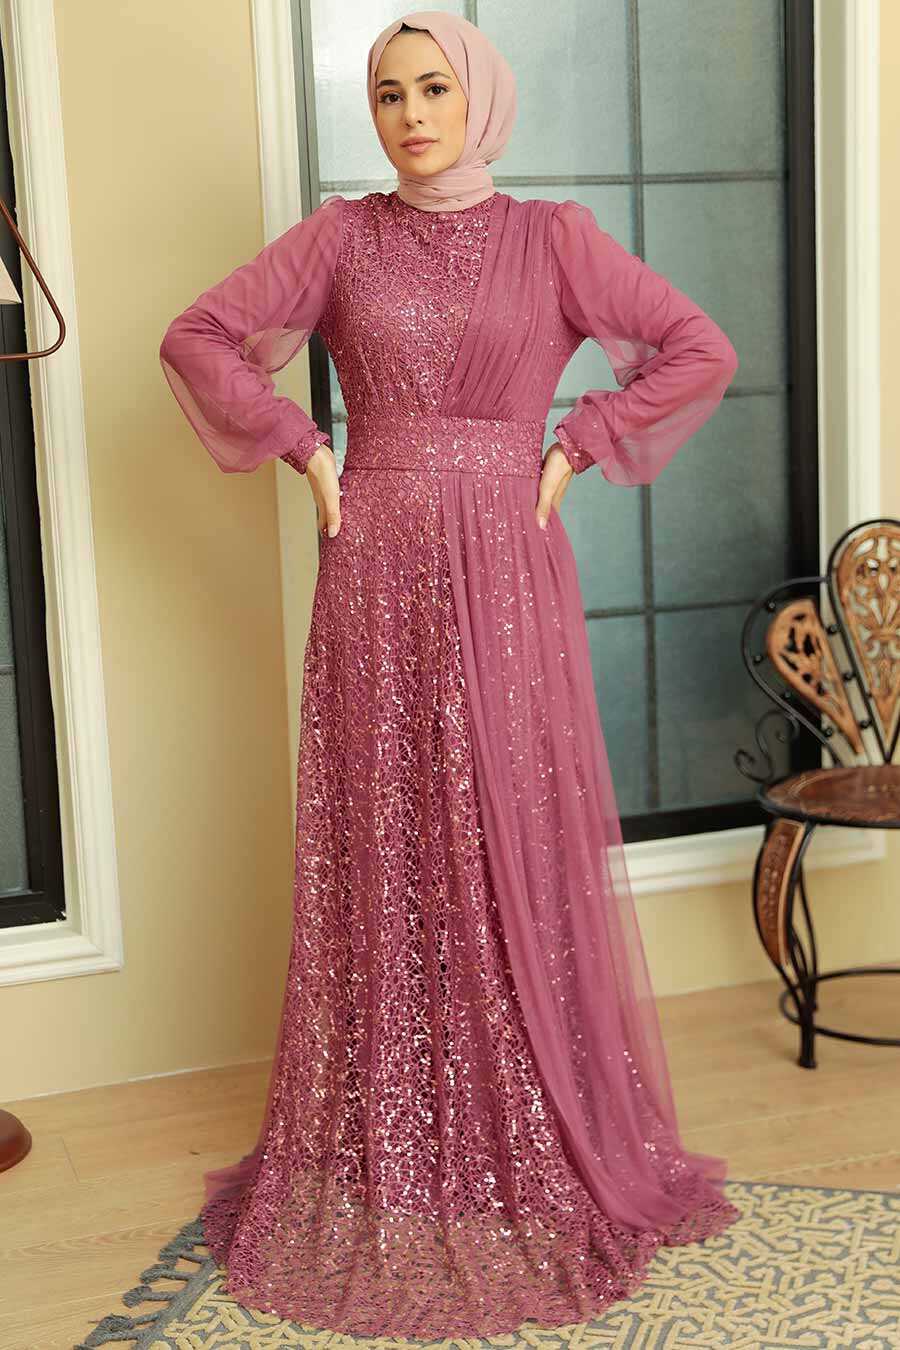 Neva Style - Modern Dusty Rose Muslim Wedding Gown 5696GK